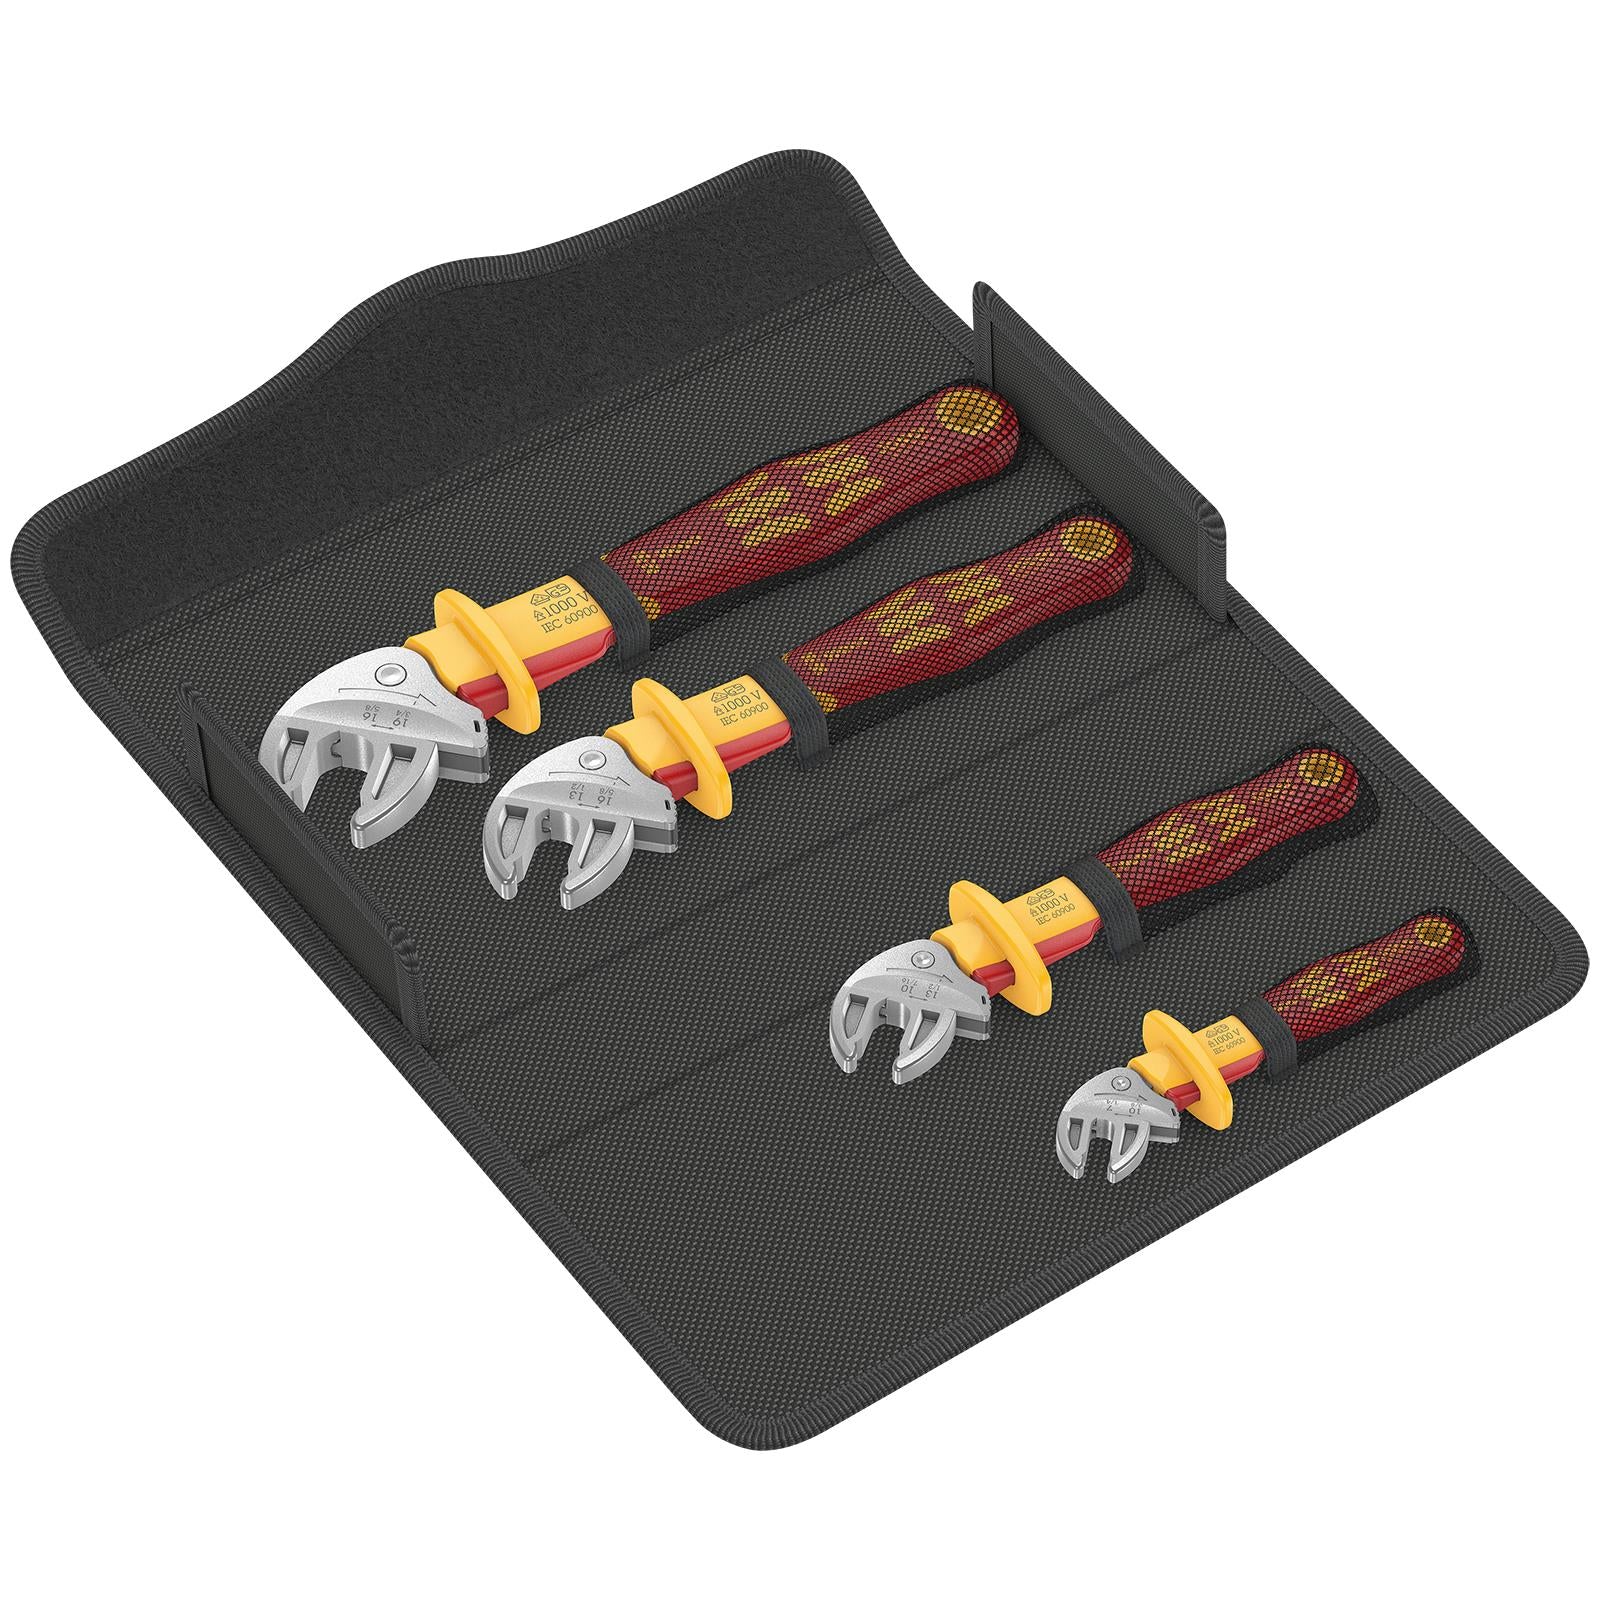 Wera Joker VDE 4 Set 1 6004 Insulated Self Setting Adjustable Spanner Set 4 Pieces in Case